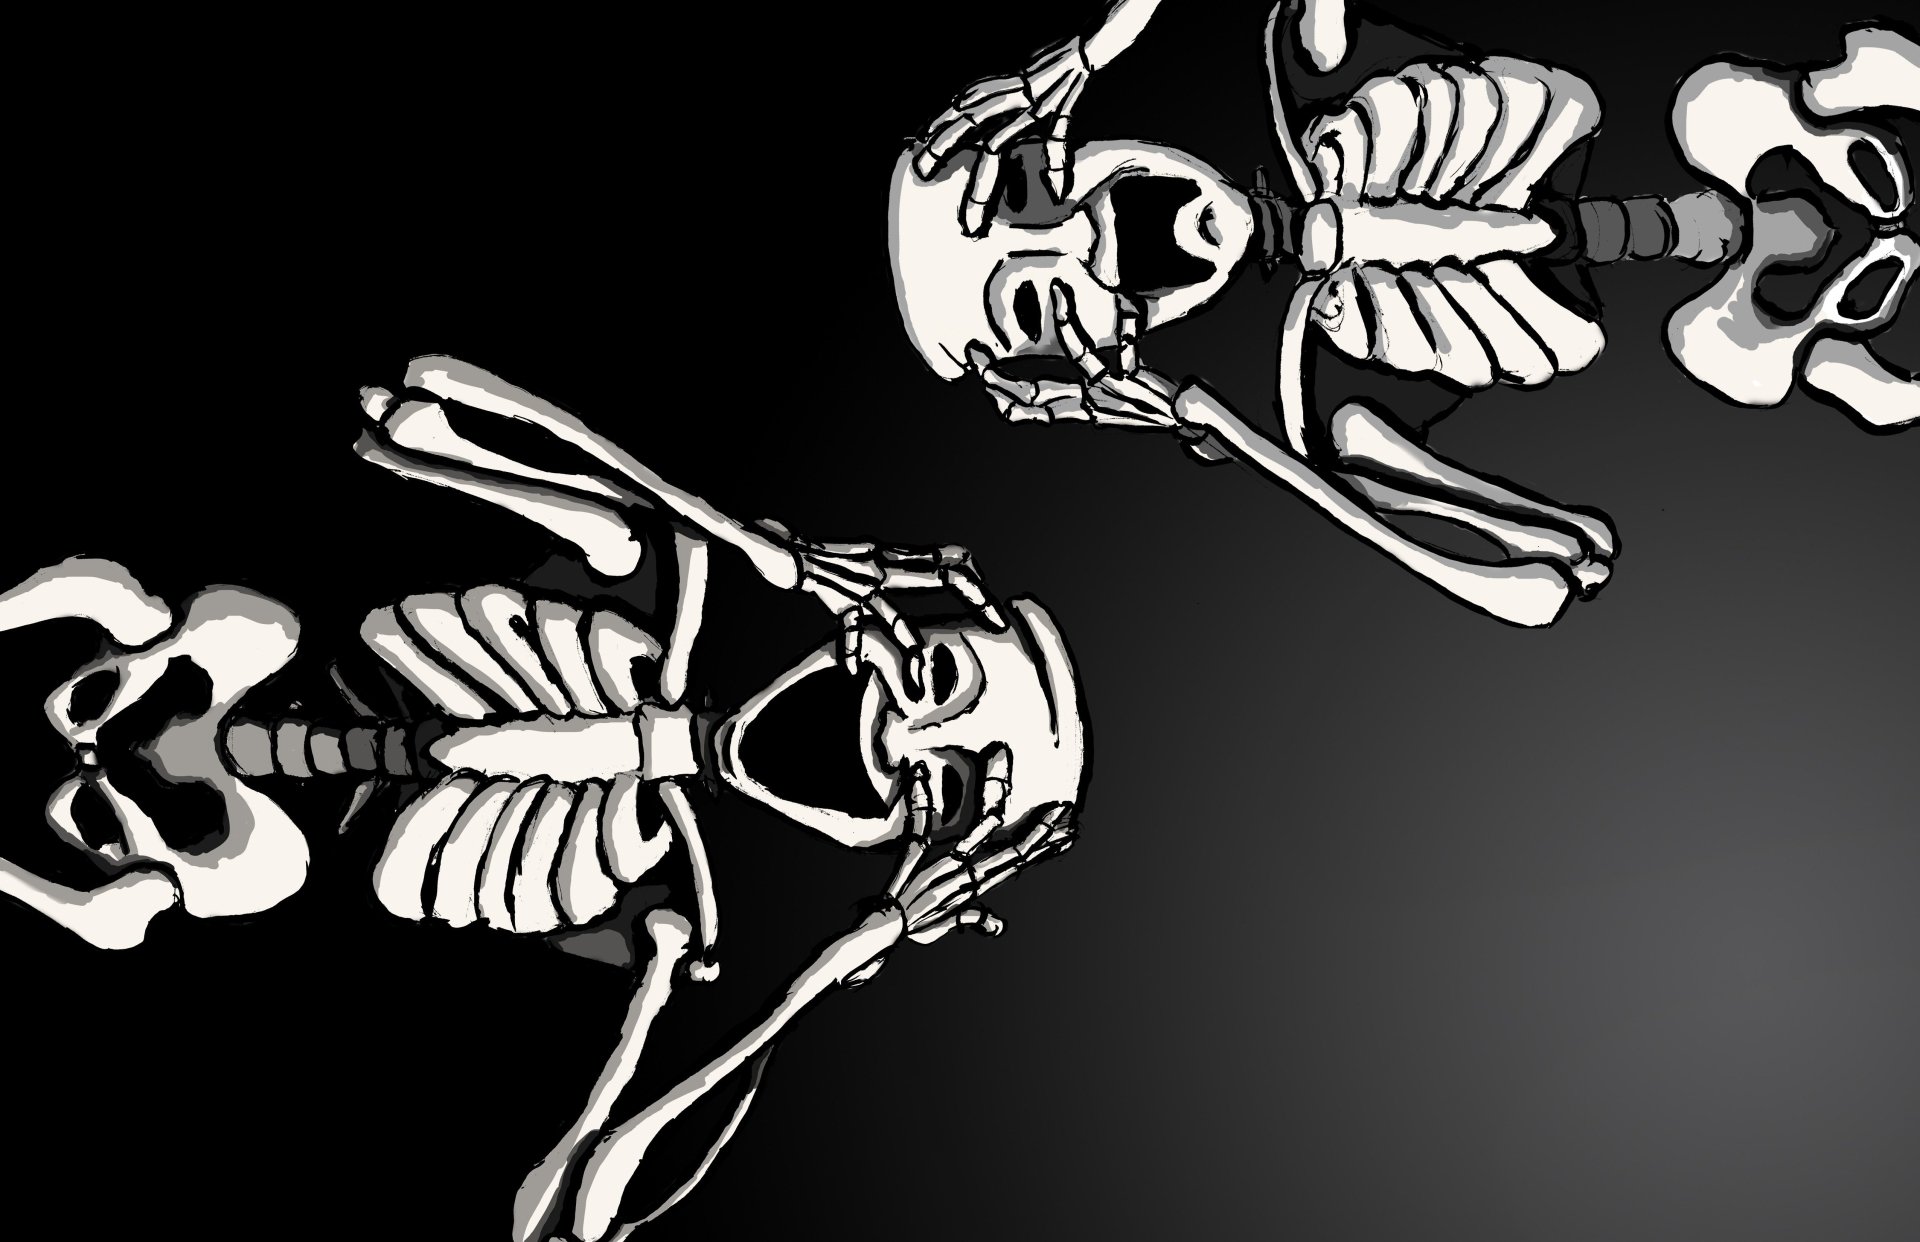 4K Ultra HD Skeleton Wallpaper and Background Image